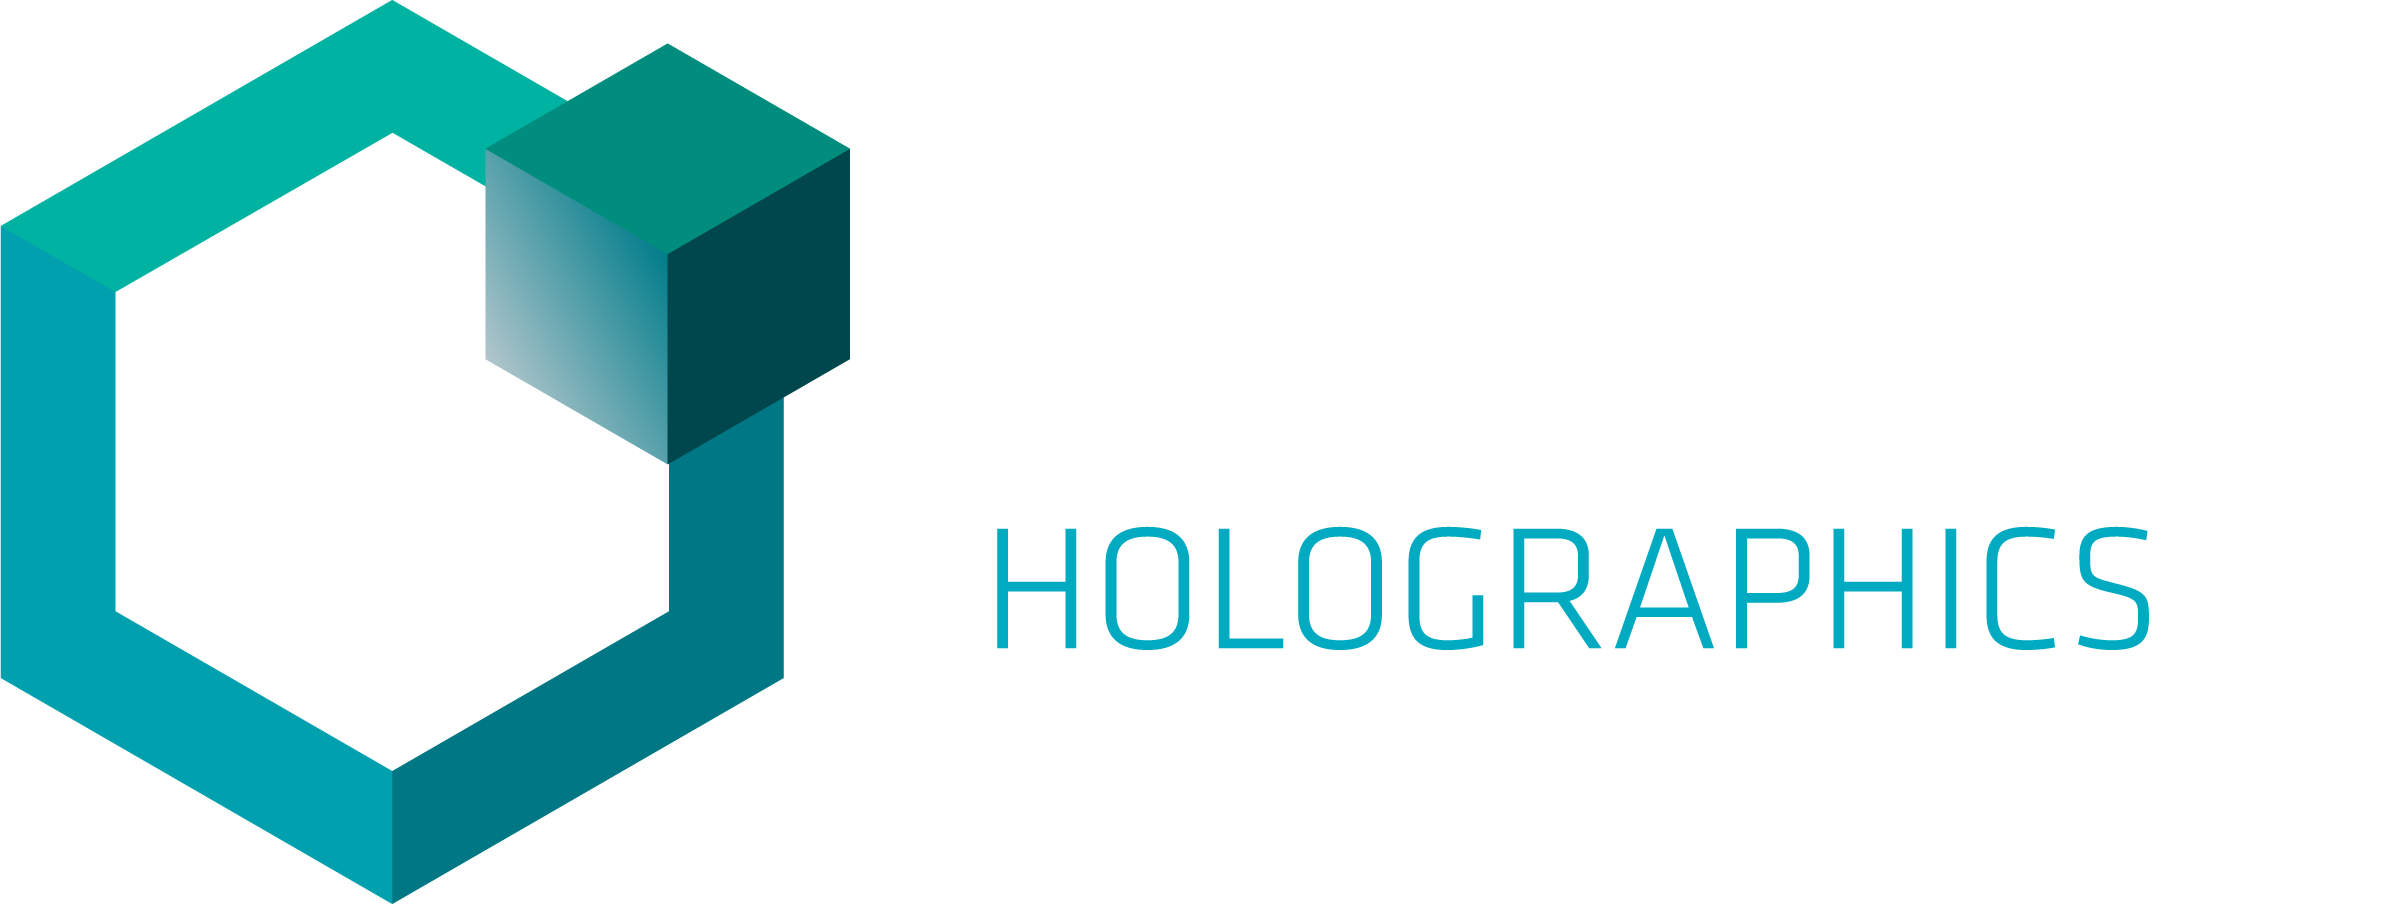 Euclideon Holographics